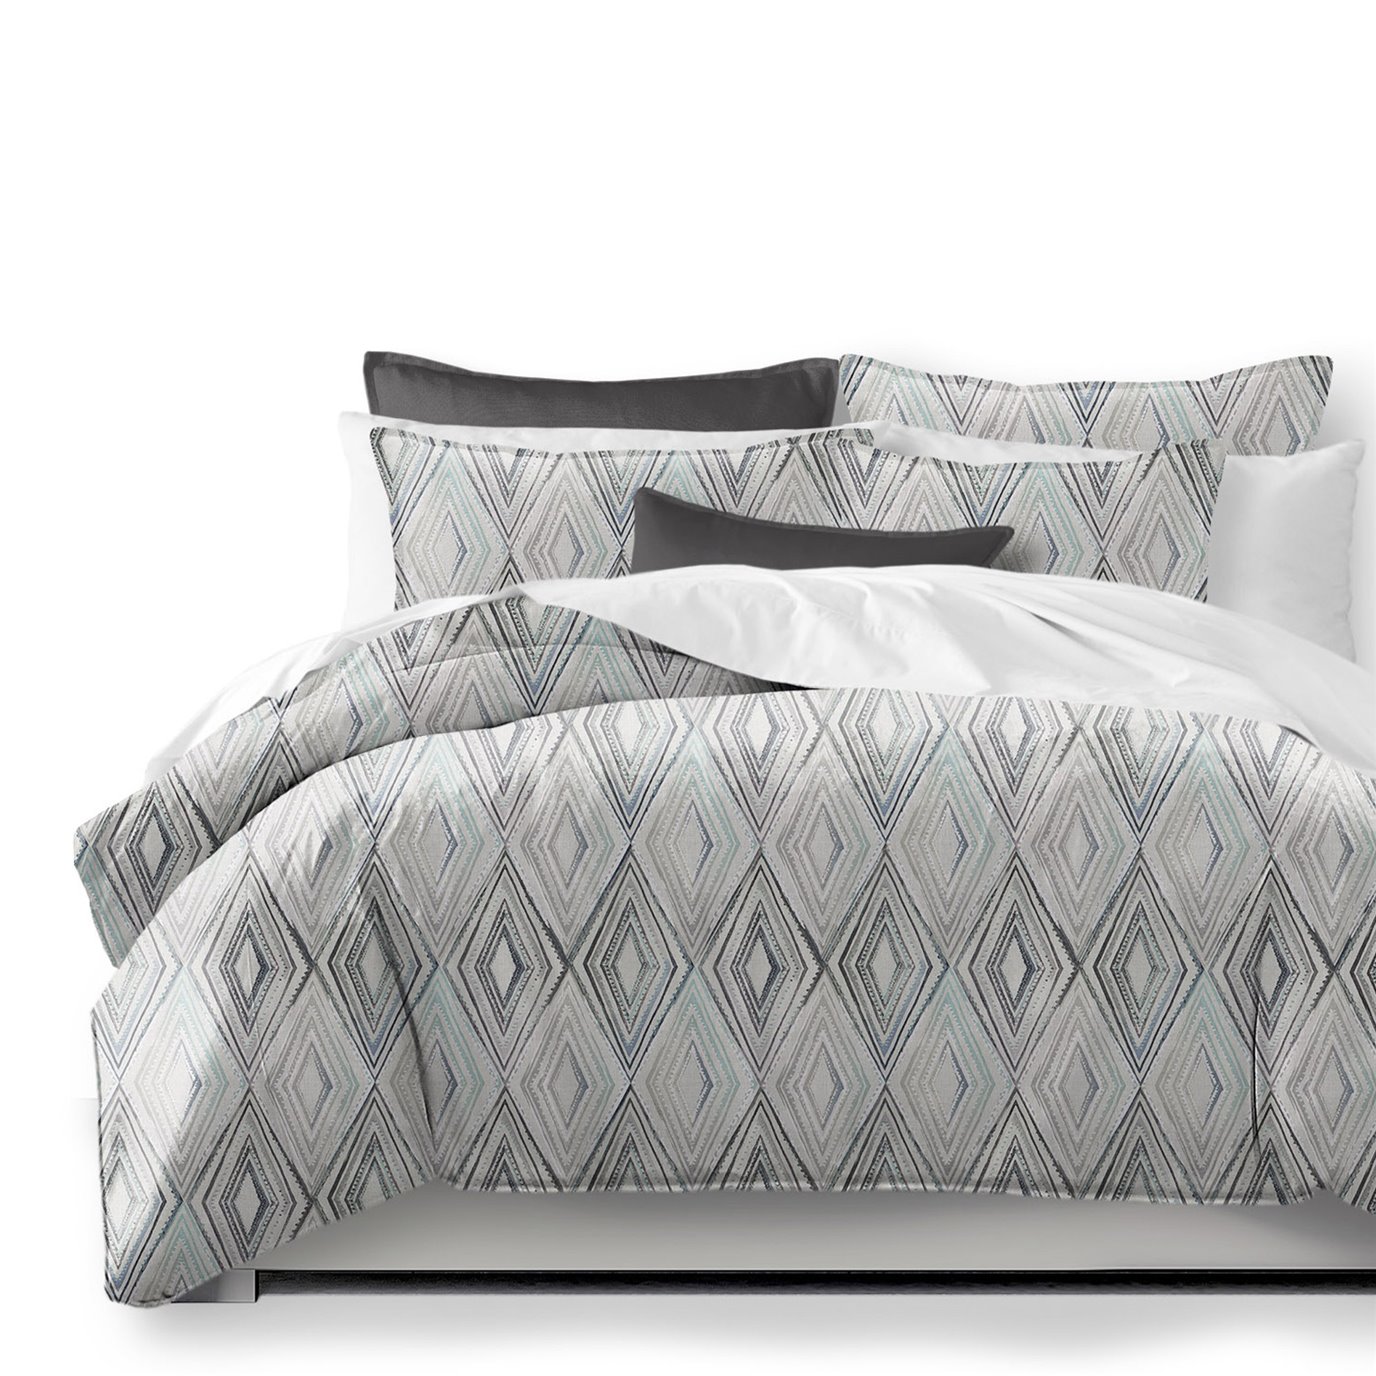 Sloane Seabreeze/Ivory Comforter and Pillow Sham(s) Set - Size King / California King